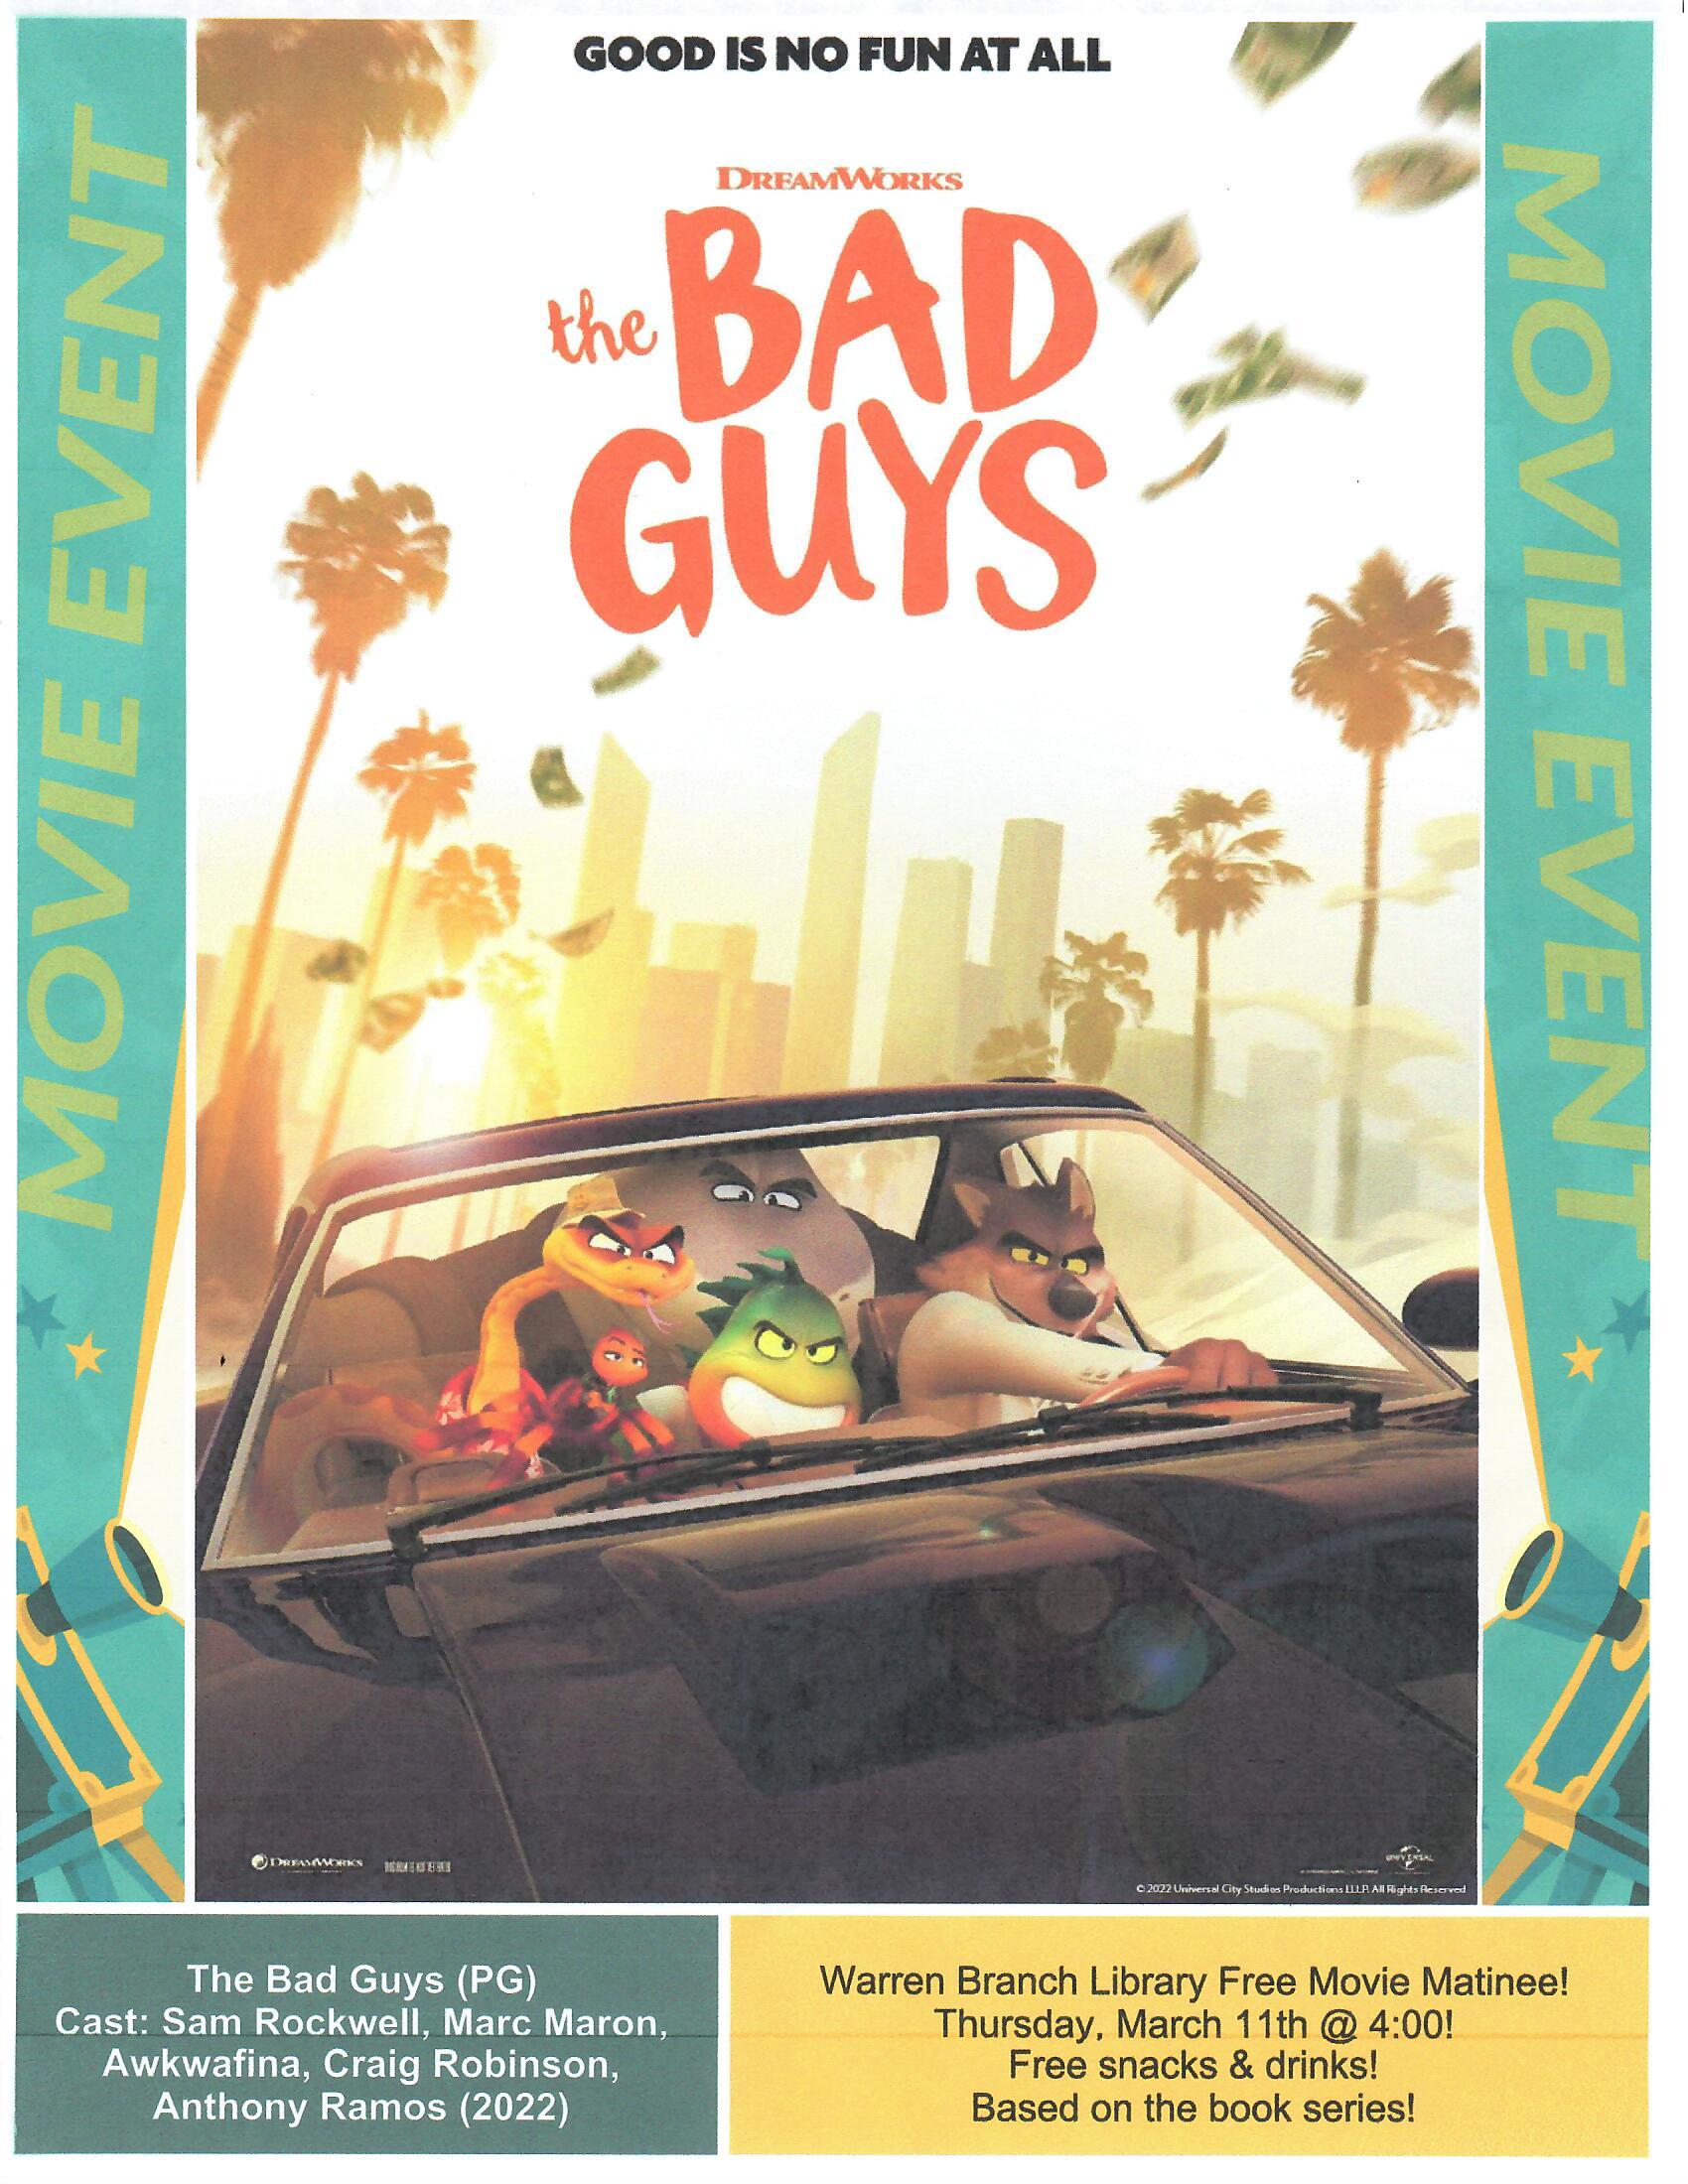 The Bad Guys (PG)